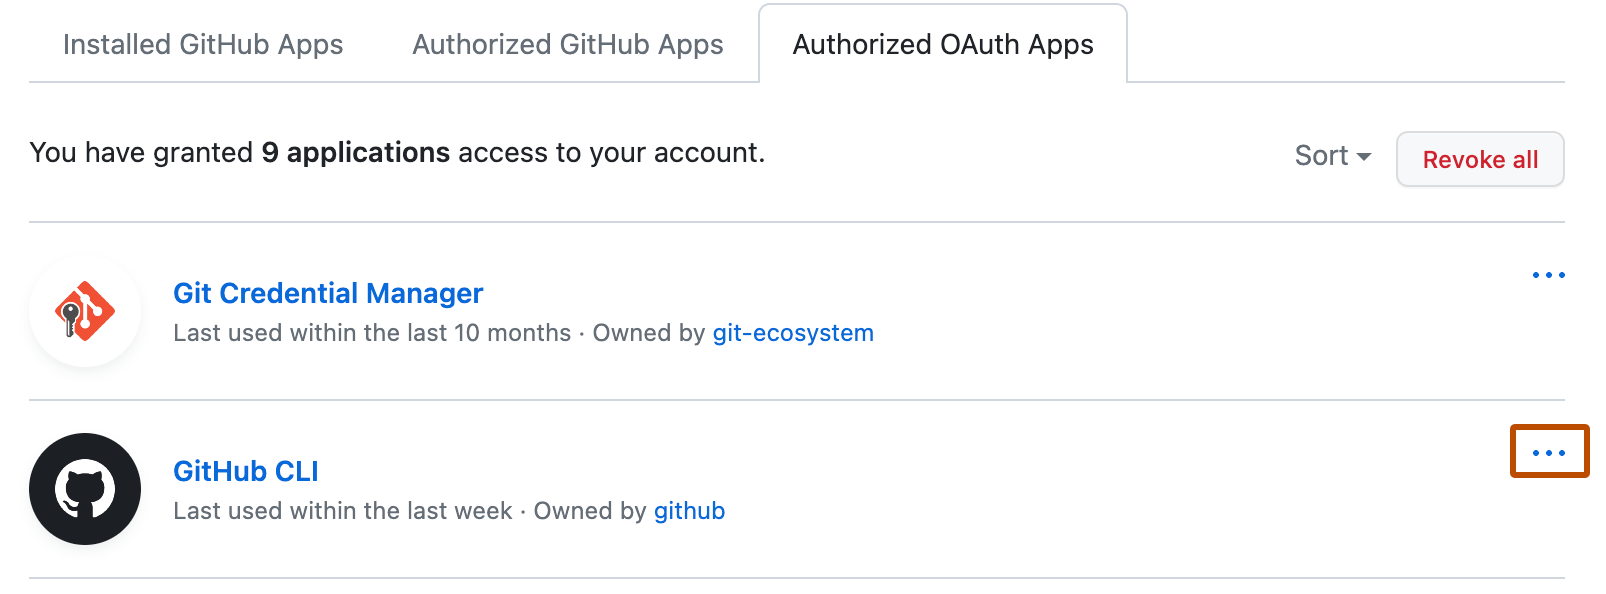 Liste autorisierter OAuth Apps